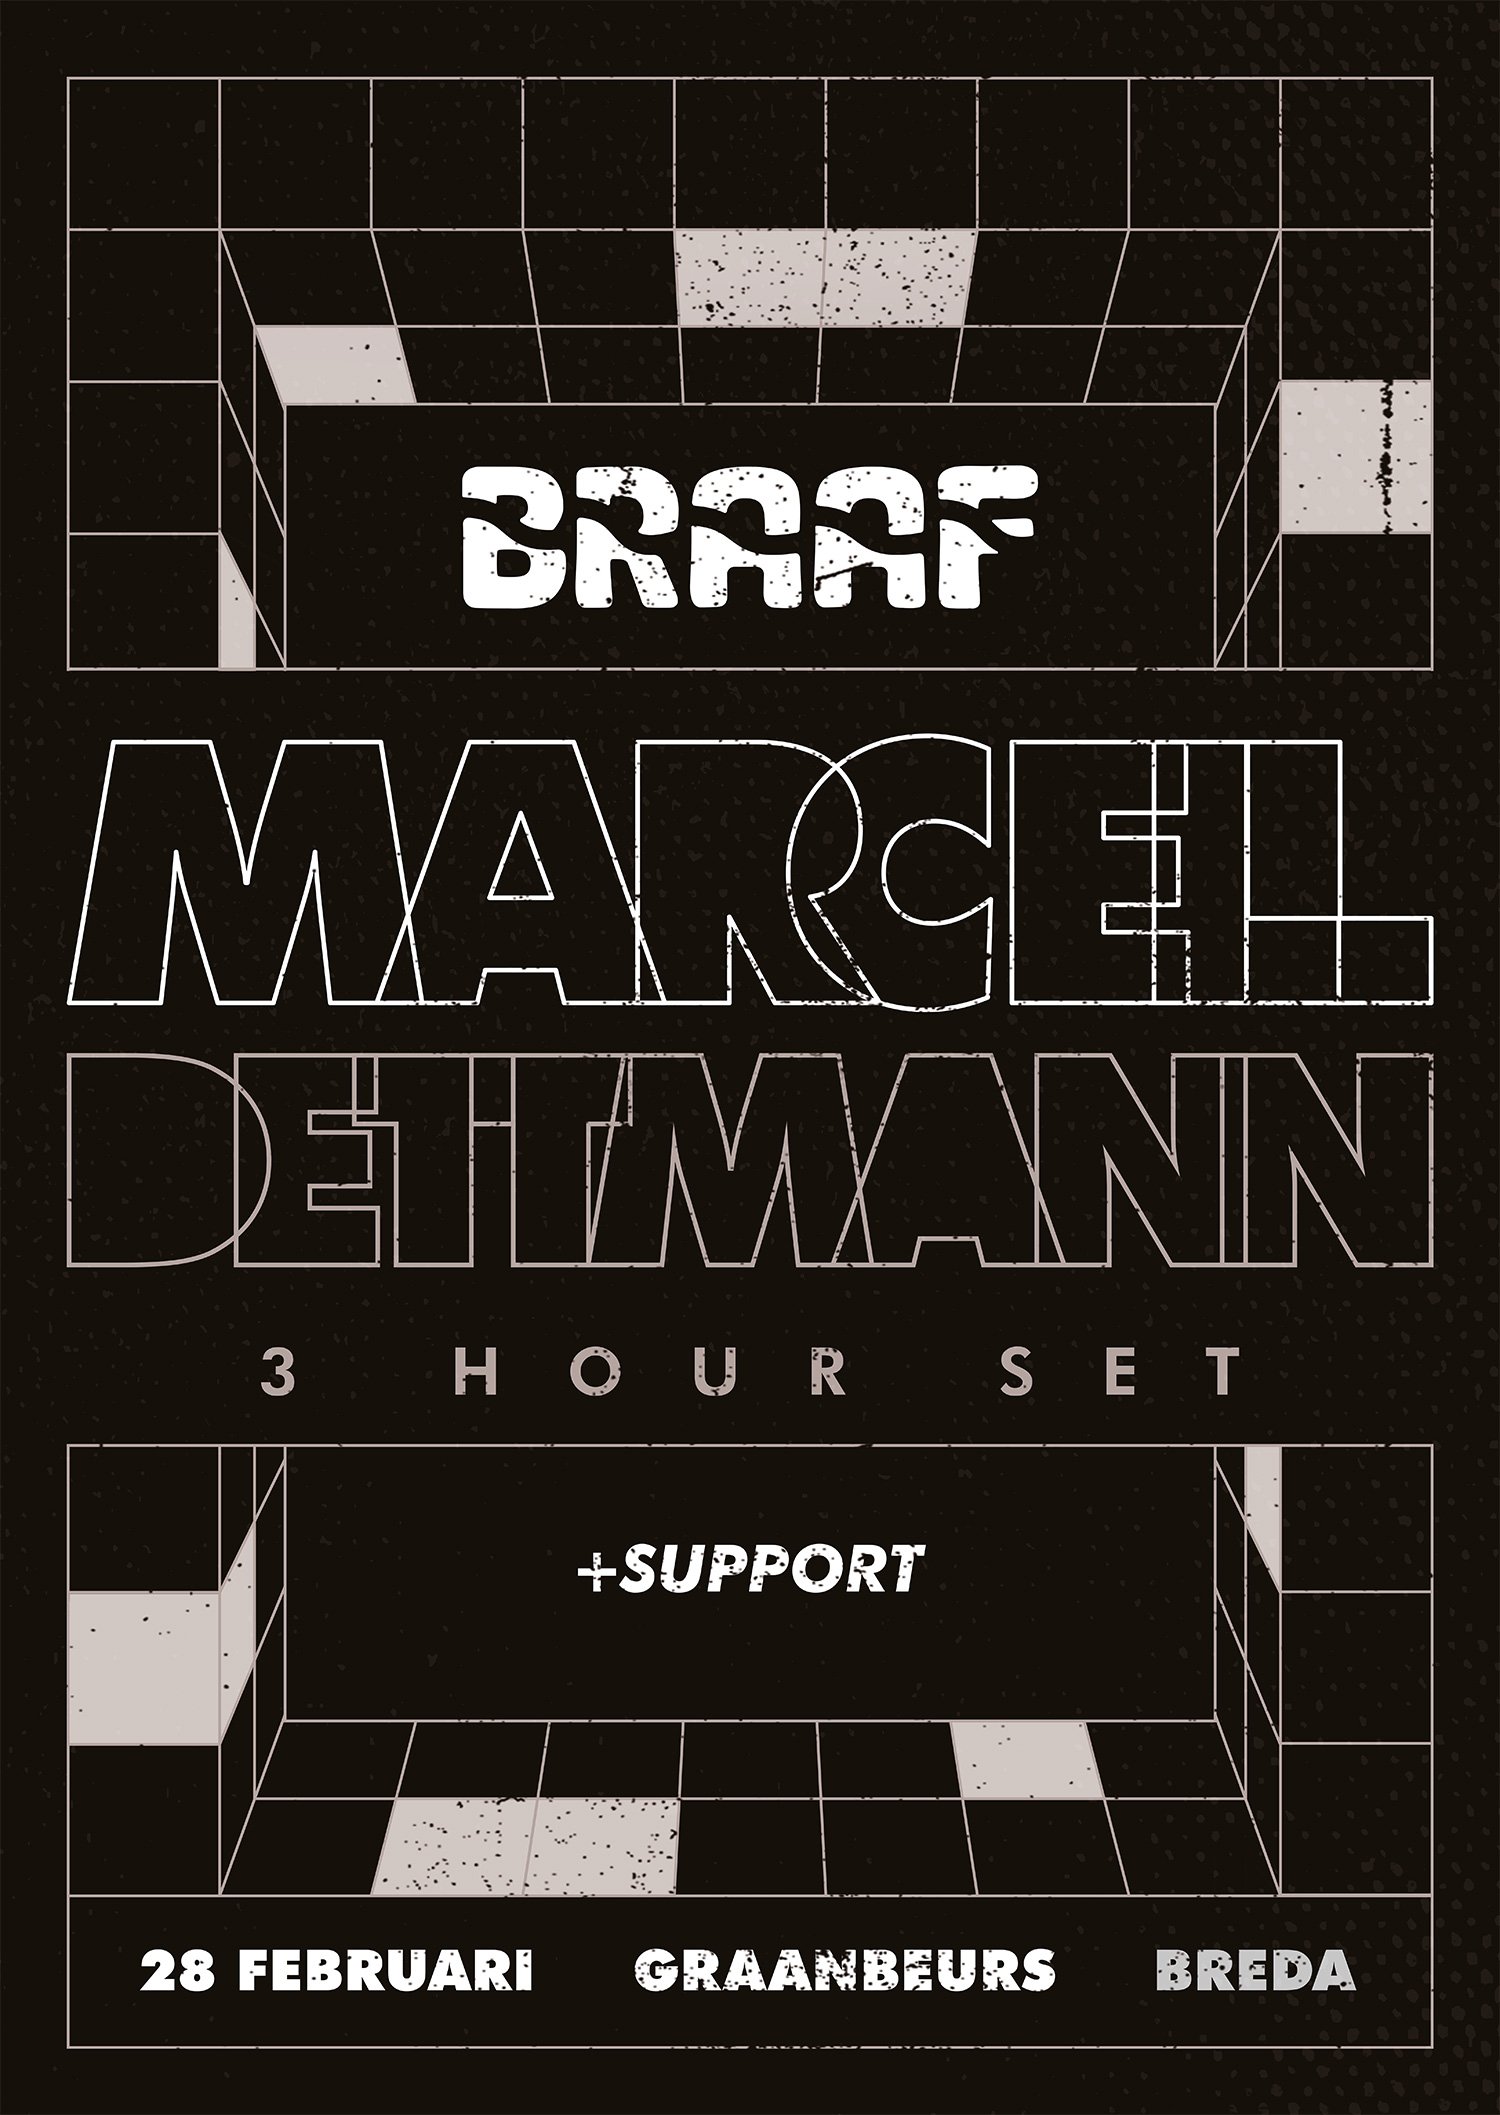 BRAAF / Marcel Dettmann